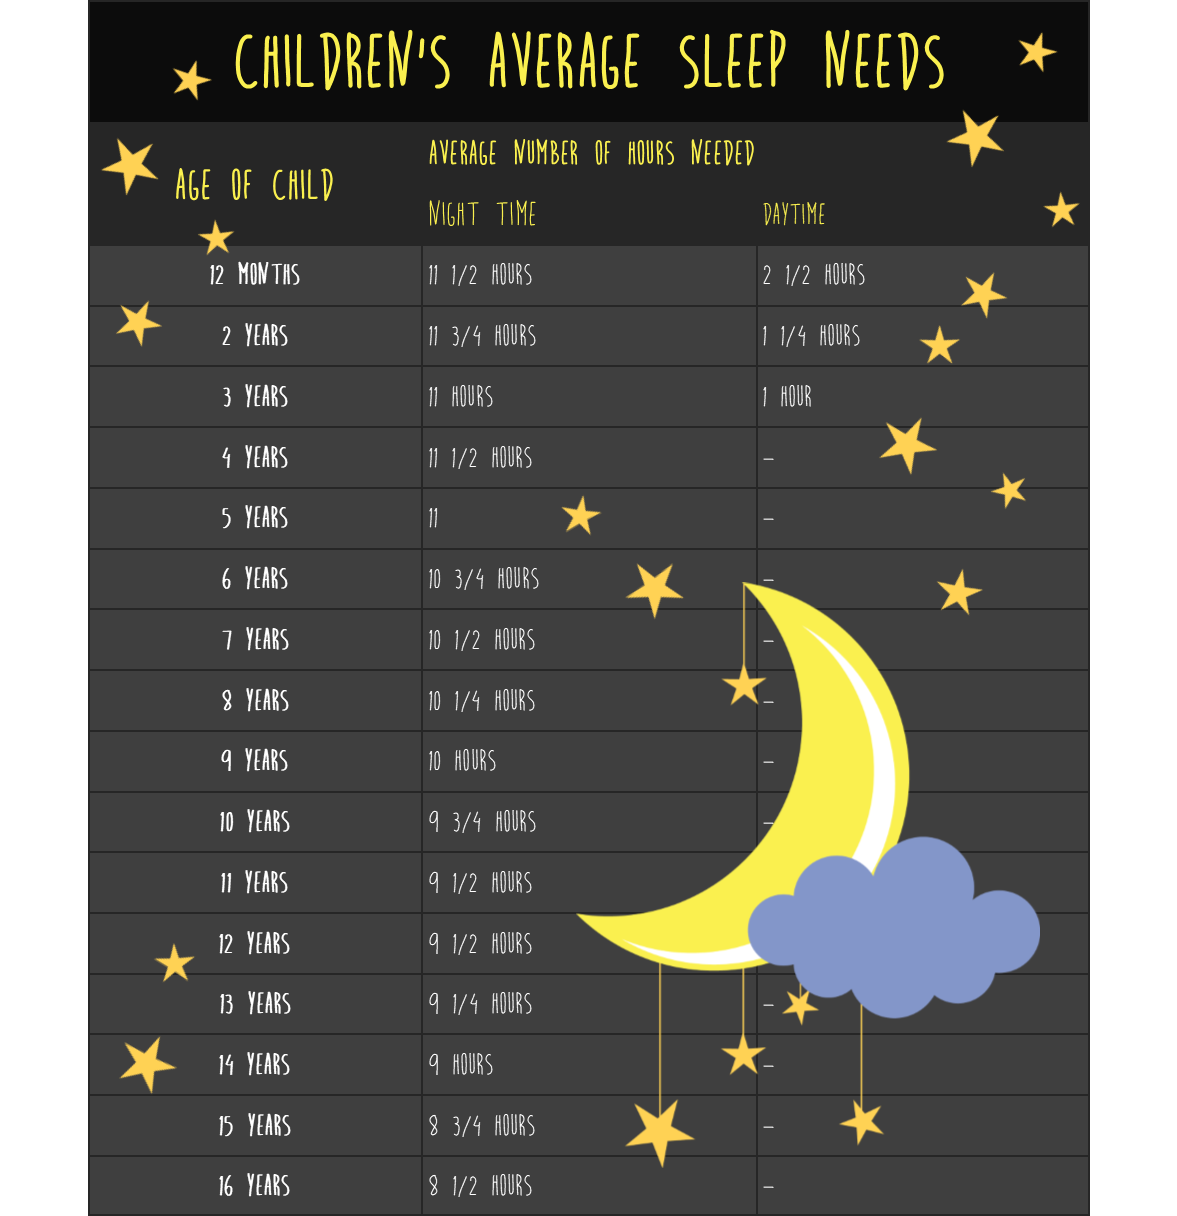 Children's average sleep needs